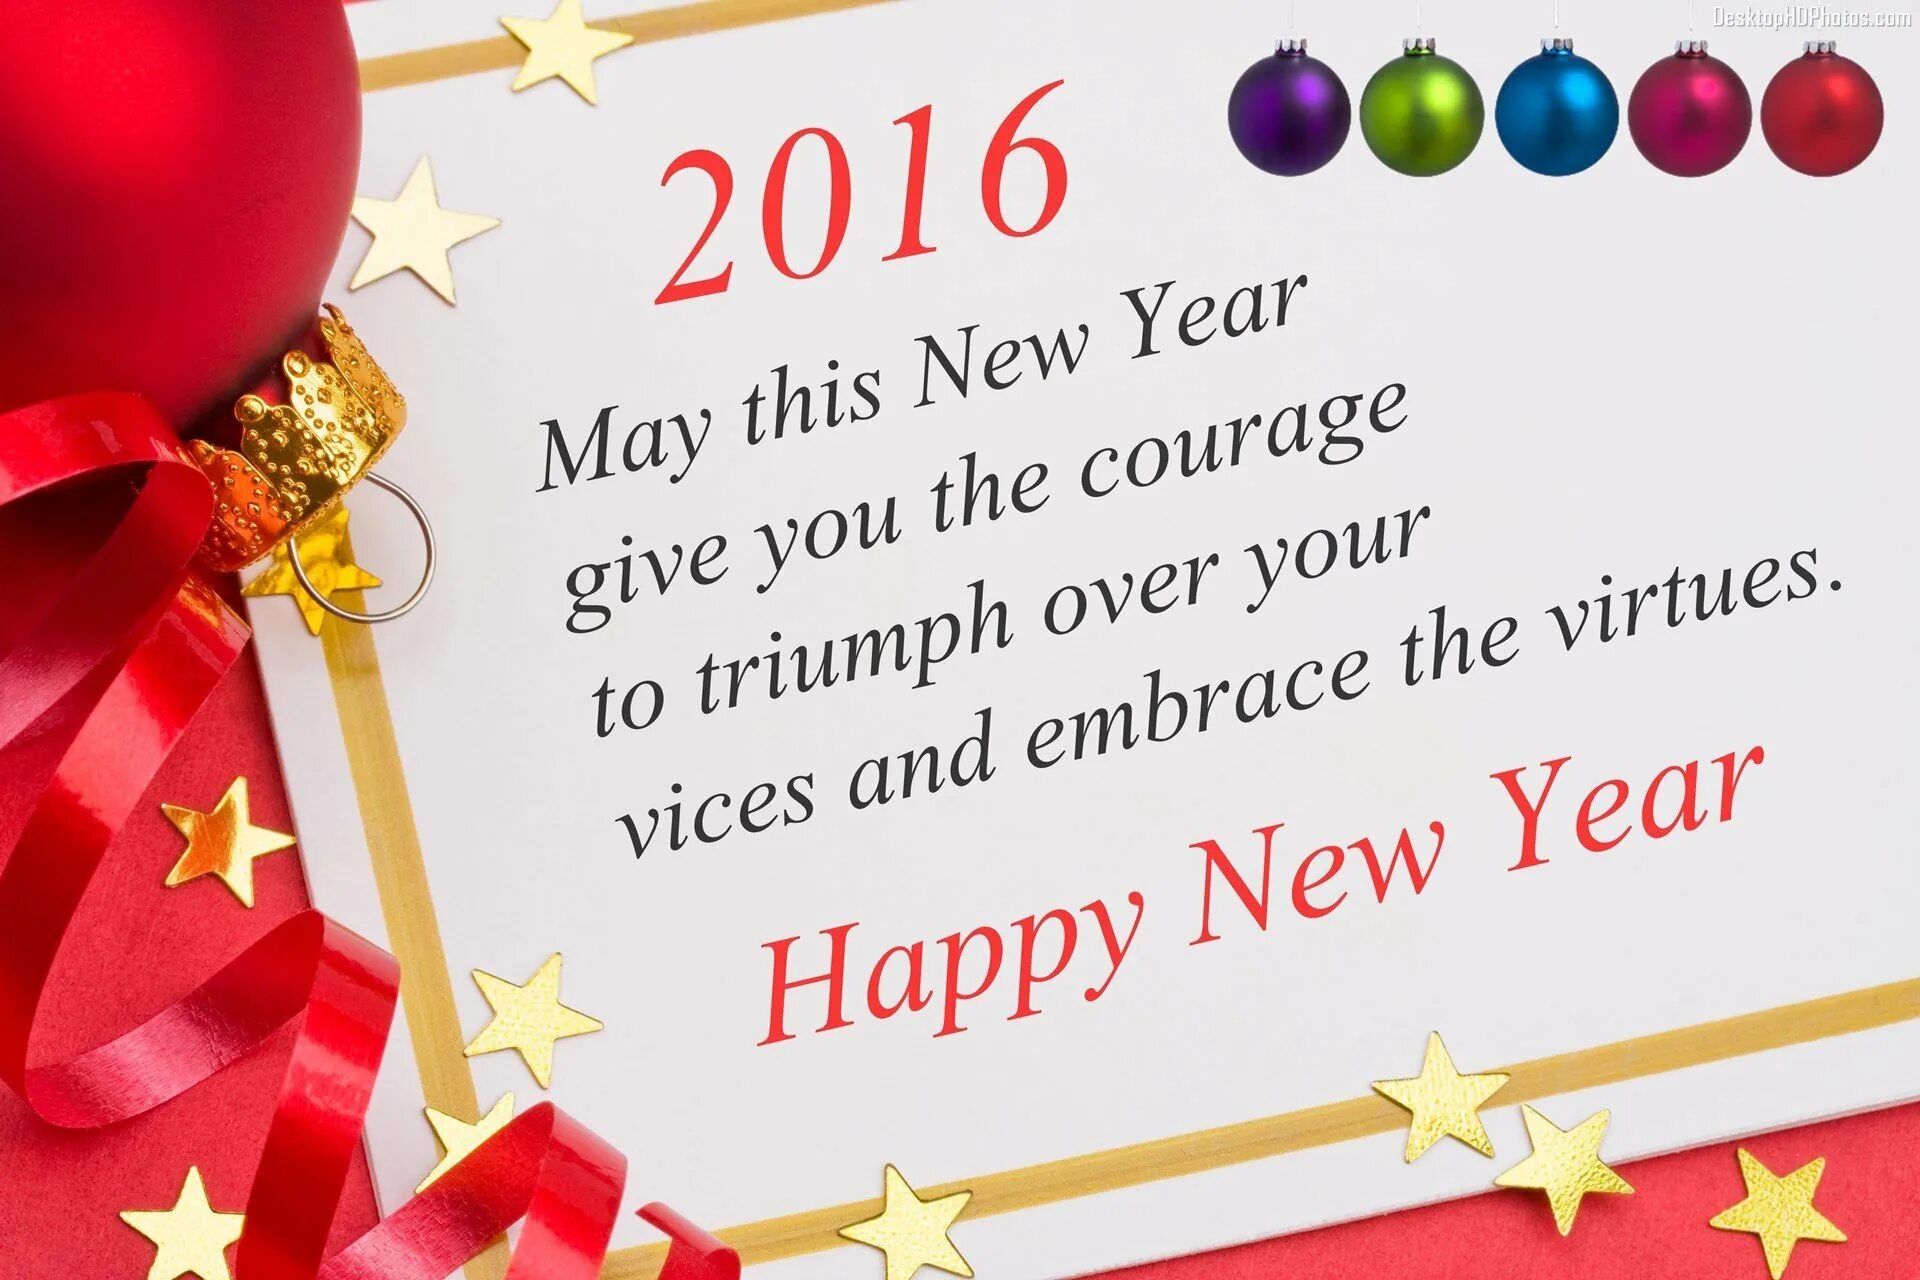 My new year holiday. Happy New year поздравление. Поздравление с новым годом на английском языке. Открытки с новым годом на английском языке. Открытка на новый год с поздравлением на английском.